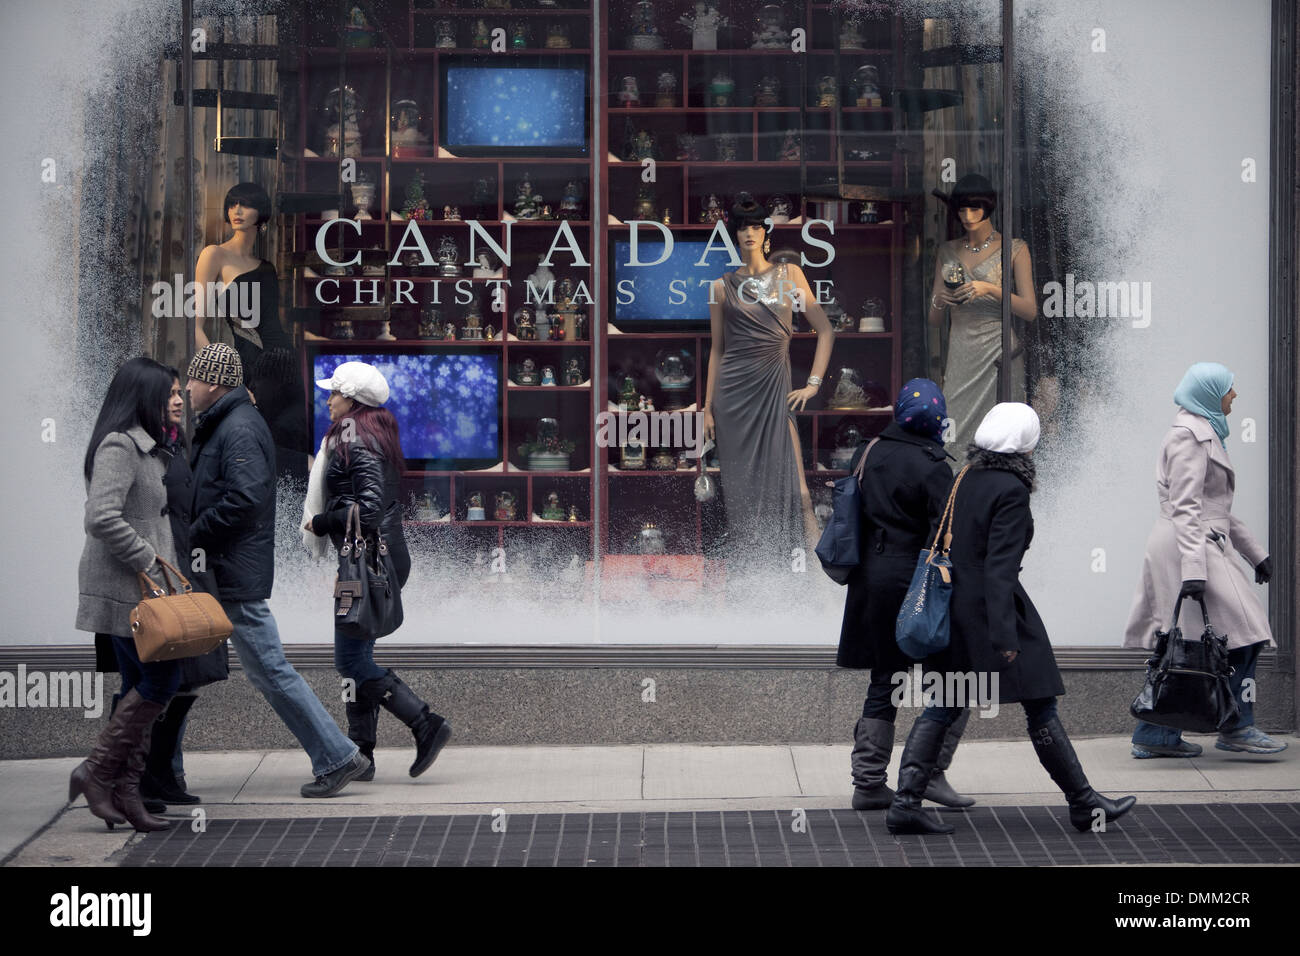 canada's christmas store The Bay Christmas Windows, Toronto, Canada, December 24, 2012 Stock Photo